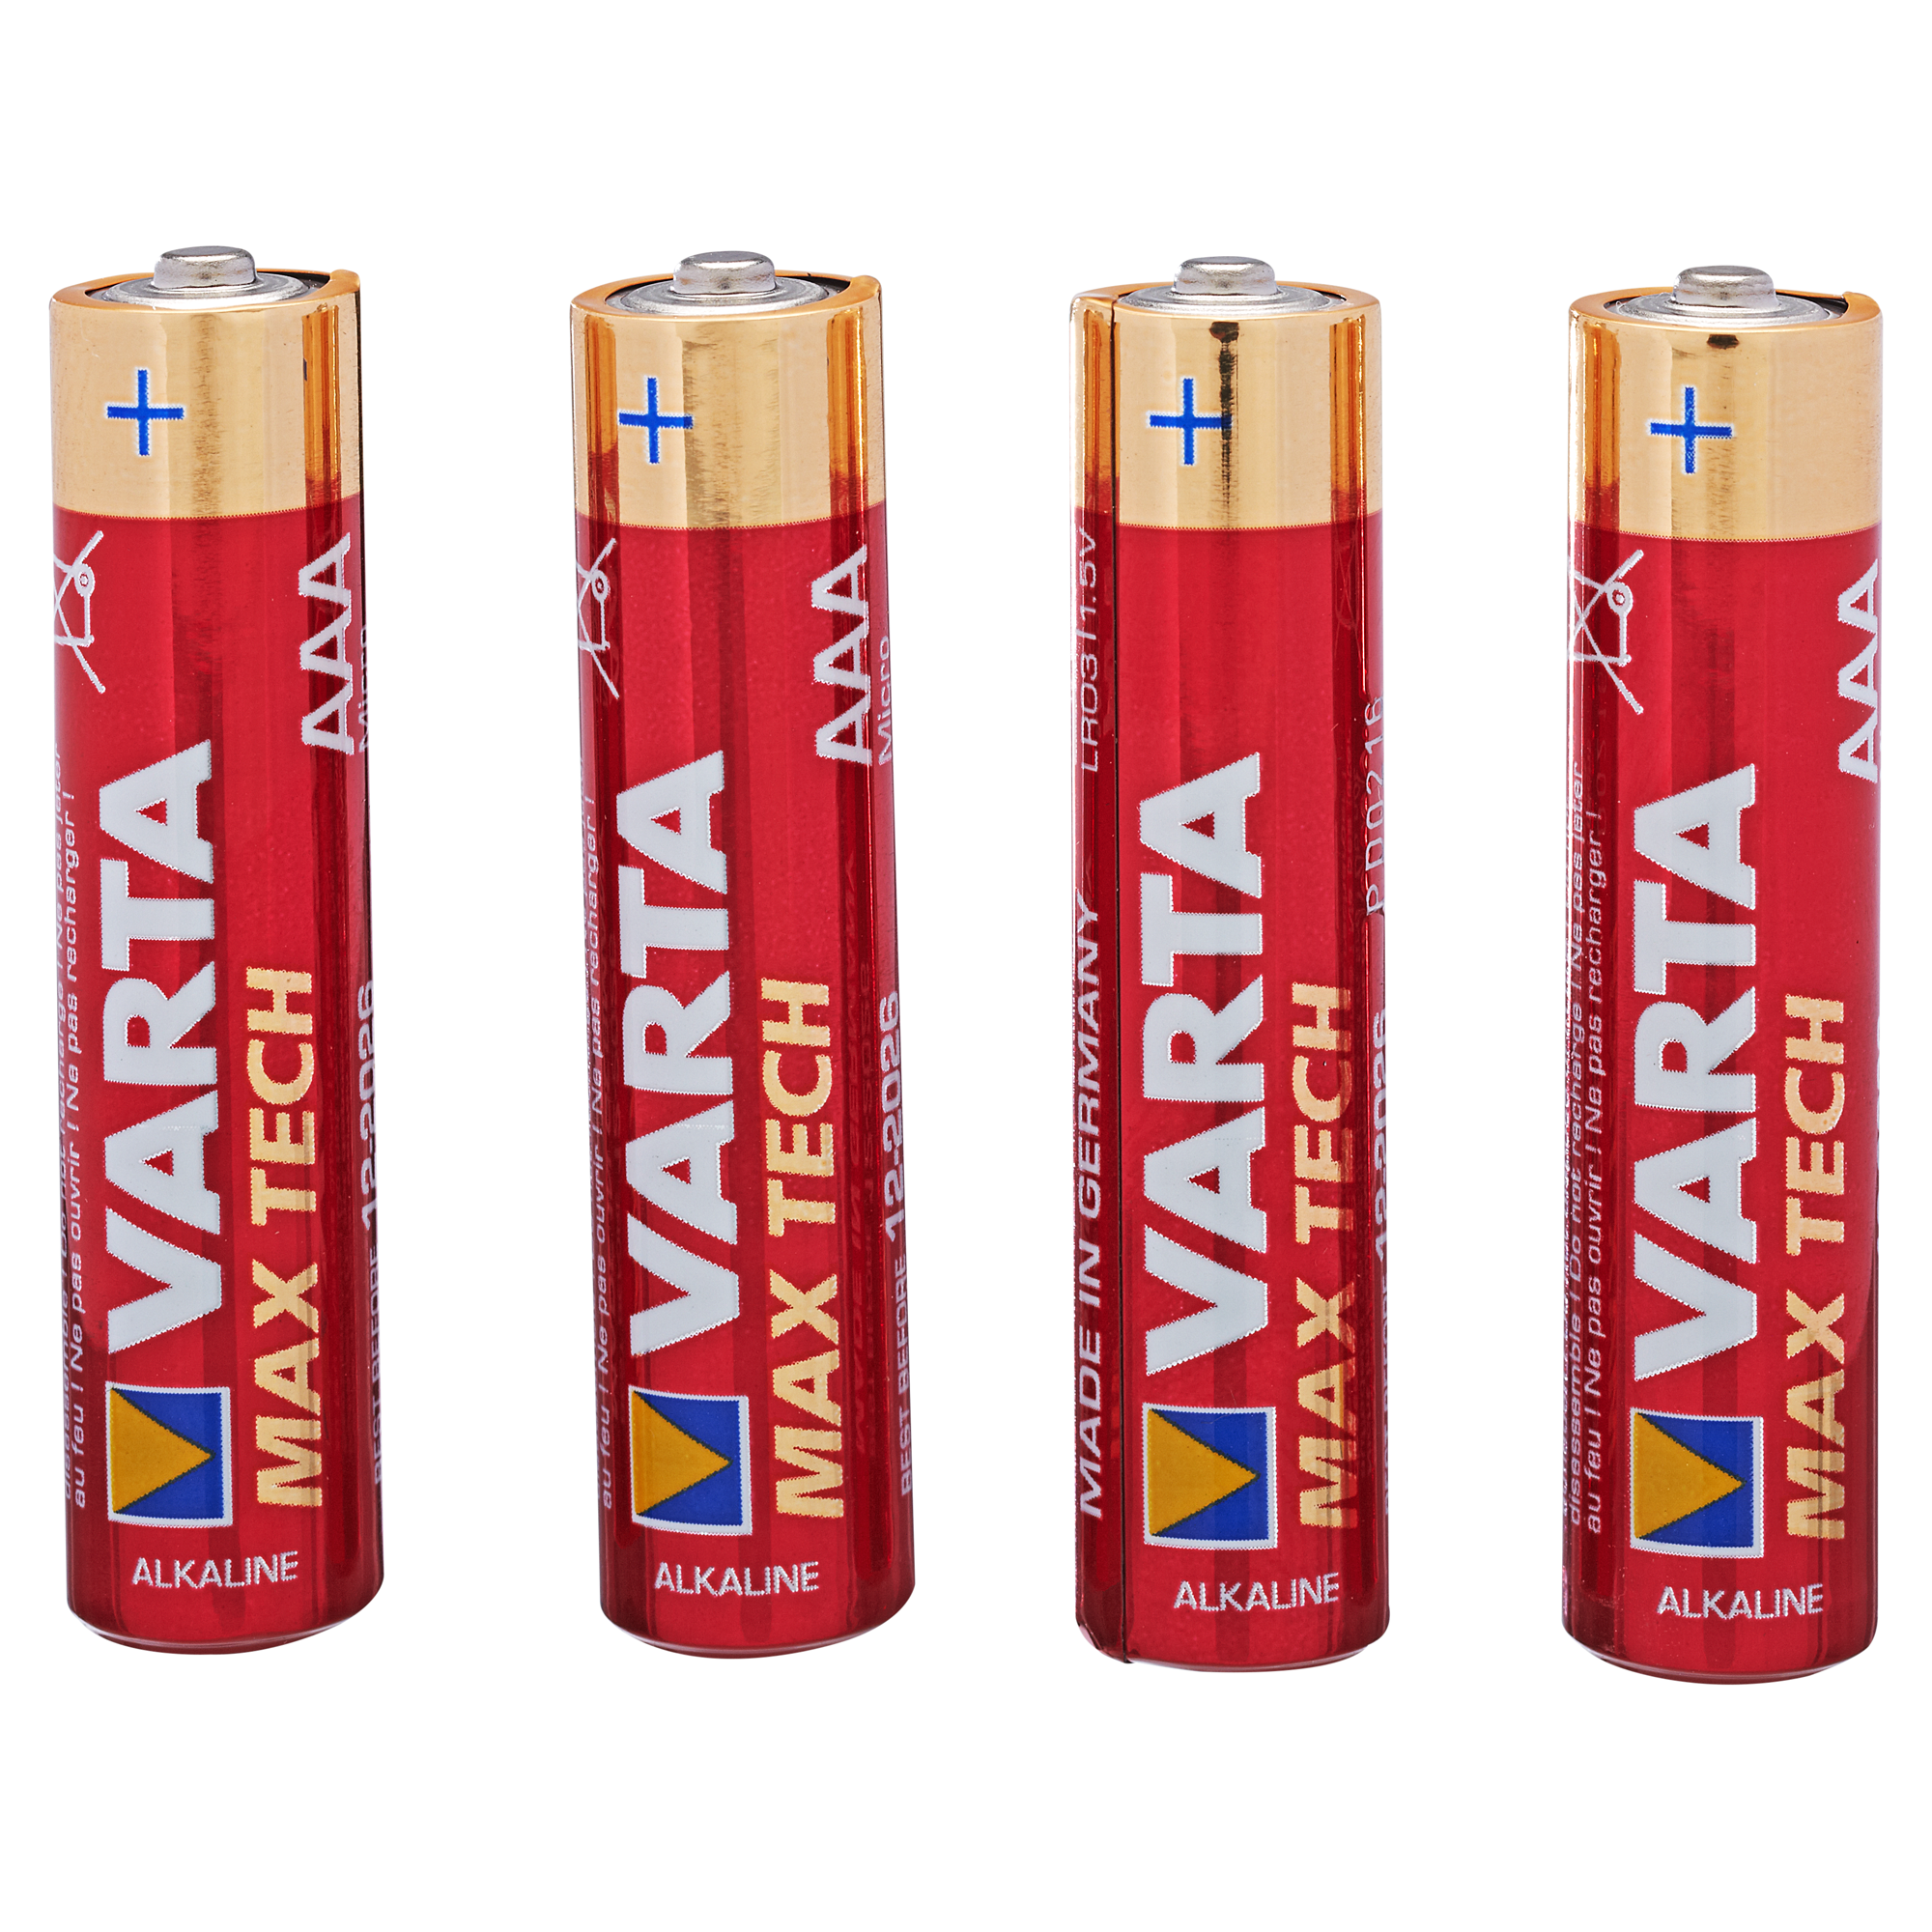 Batterien "Max Tech" AAA Alkaline 4 Stück + product picture